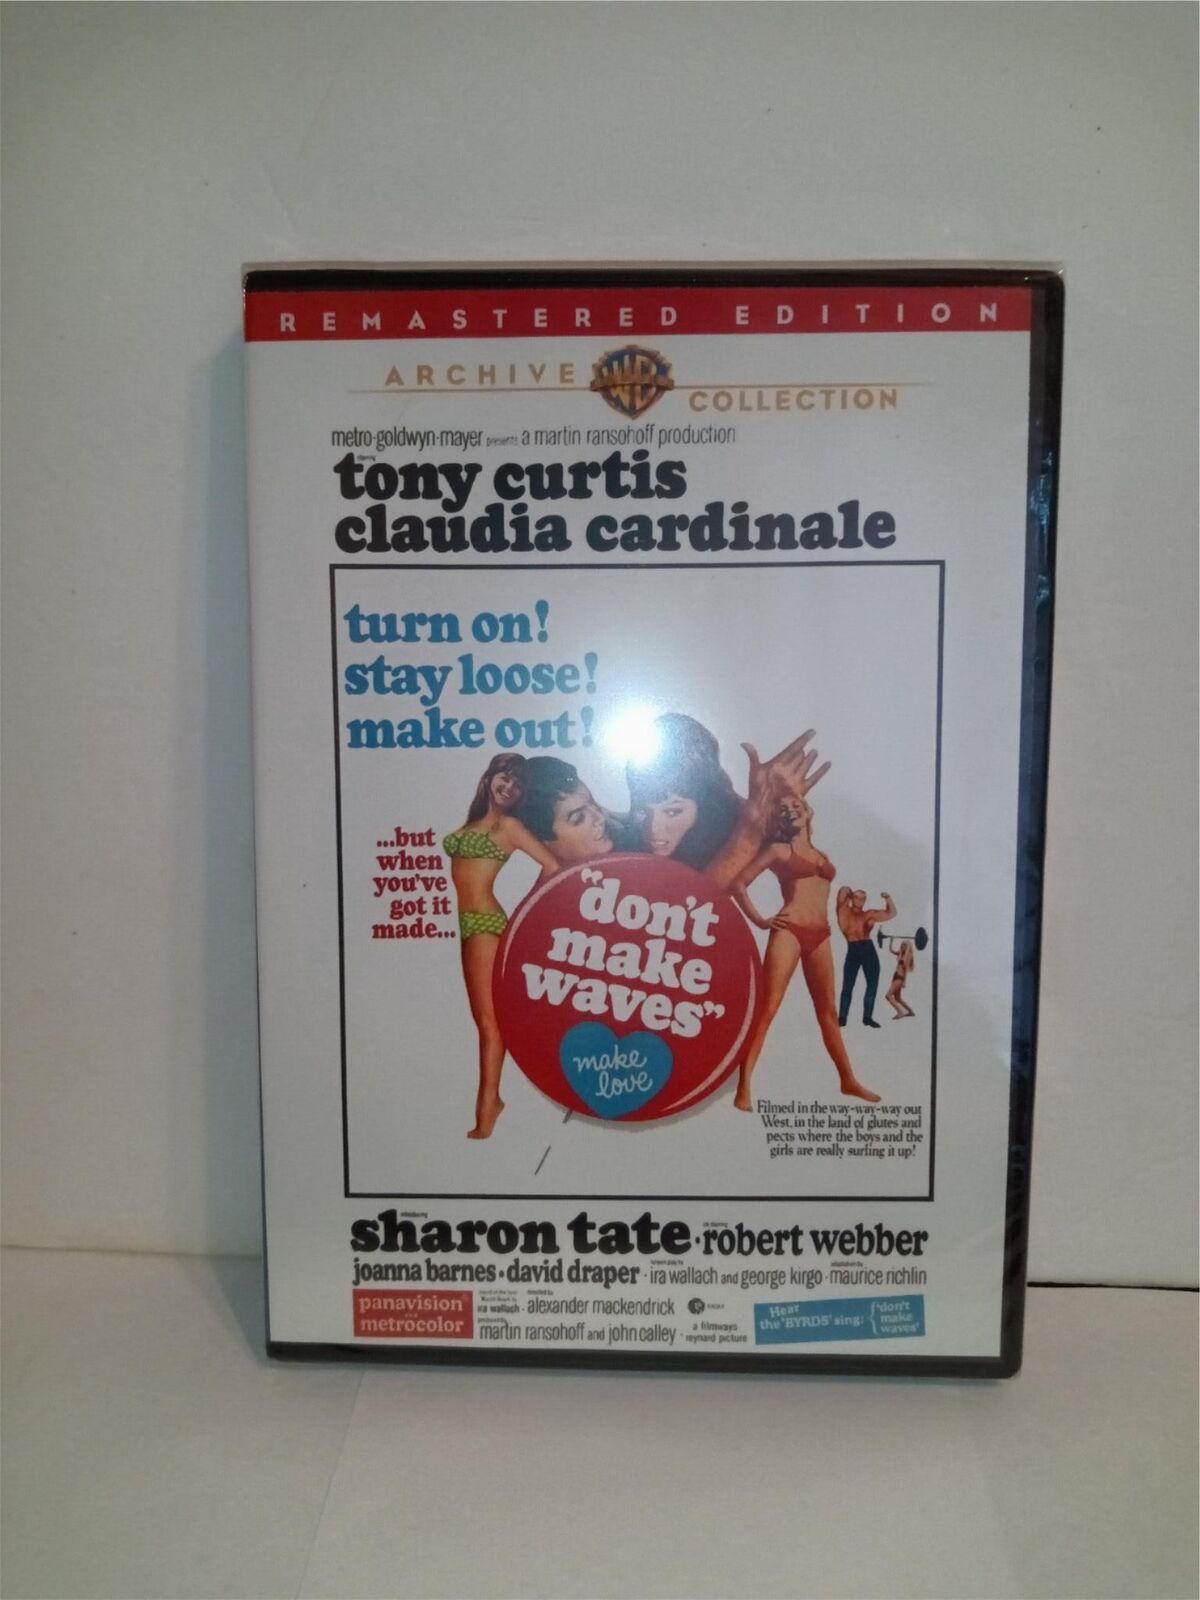 Don’t Make Waves DVD (1967) starring Tony Curtis, Robert Webber, Sharon Tate NEW